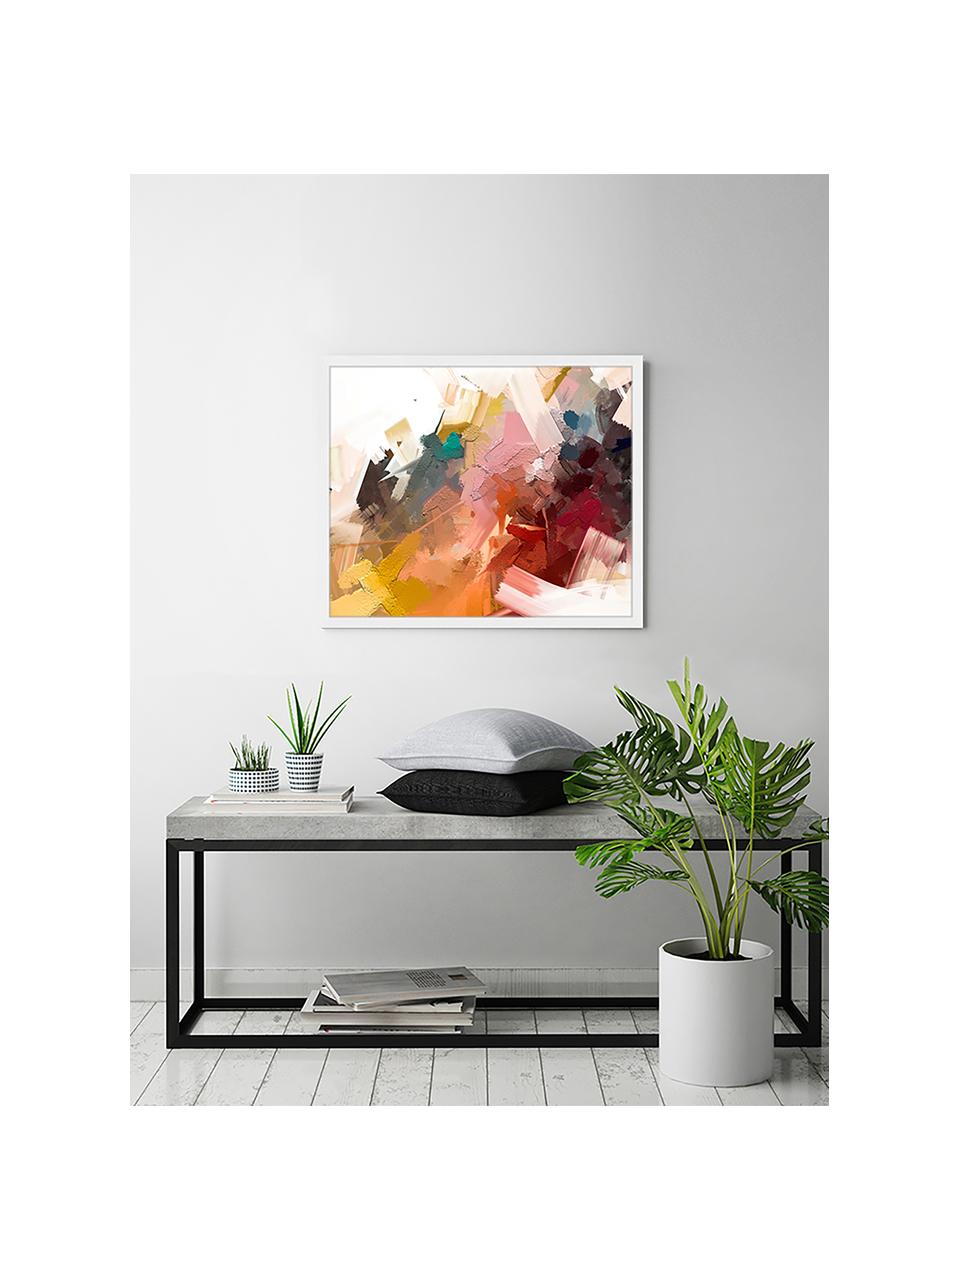 Gerahmter Digitaldruck Abstract Colorful Oil Painting, Bild: Digitaldruck auf Papier, , Rahmen: Holz, lackiert, Front: Plexiglas, Mehrfarbig, 63 x 53 cm